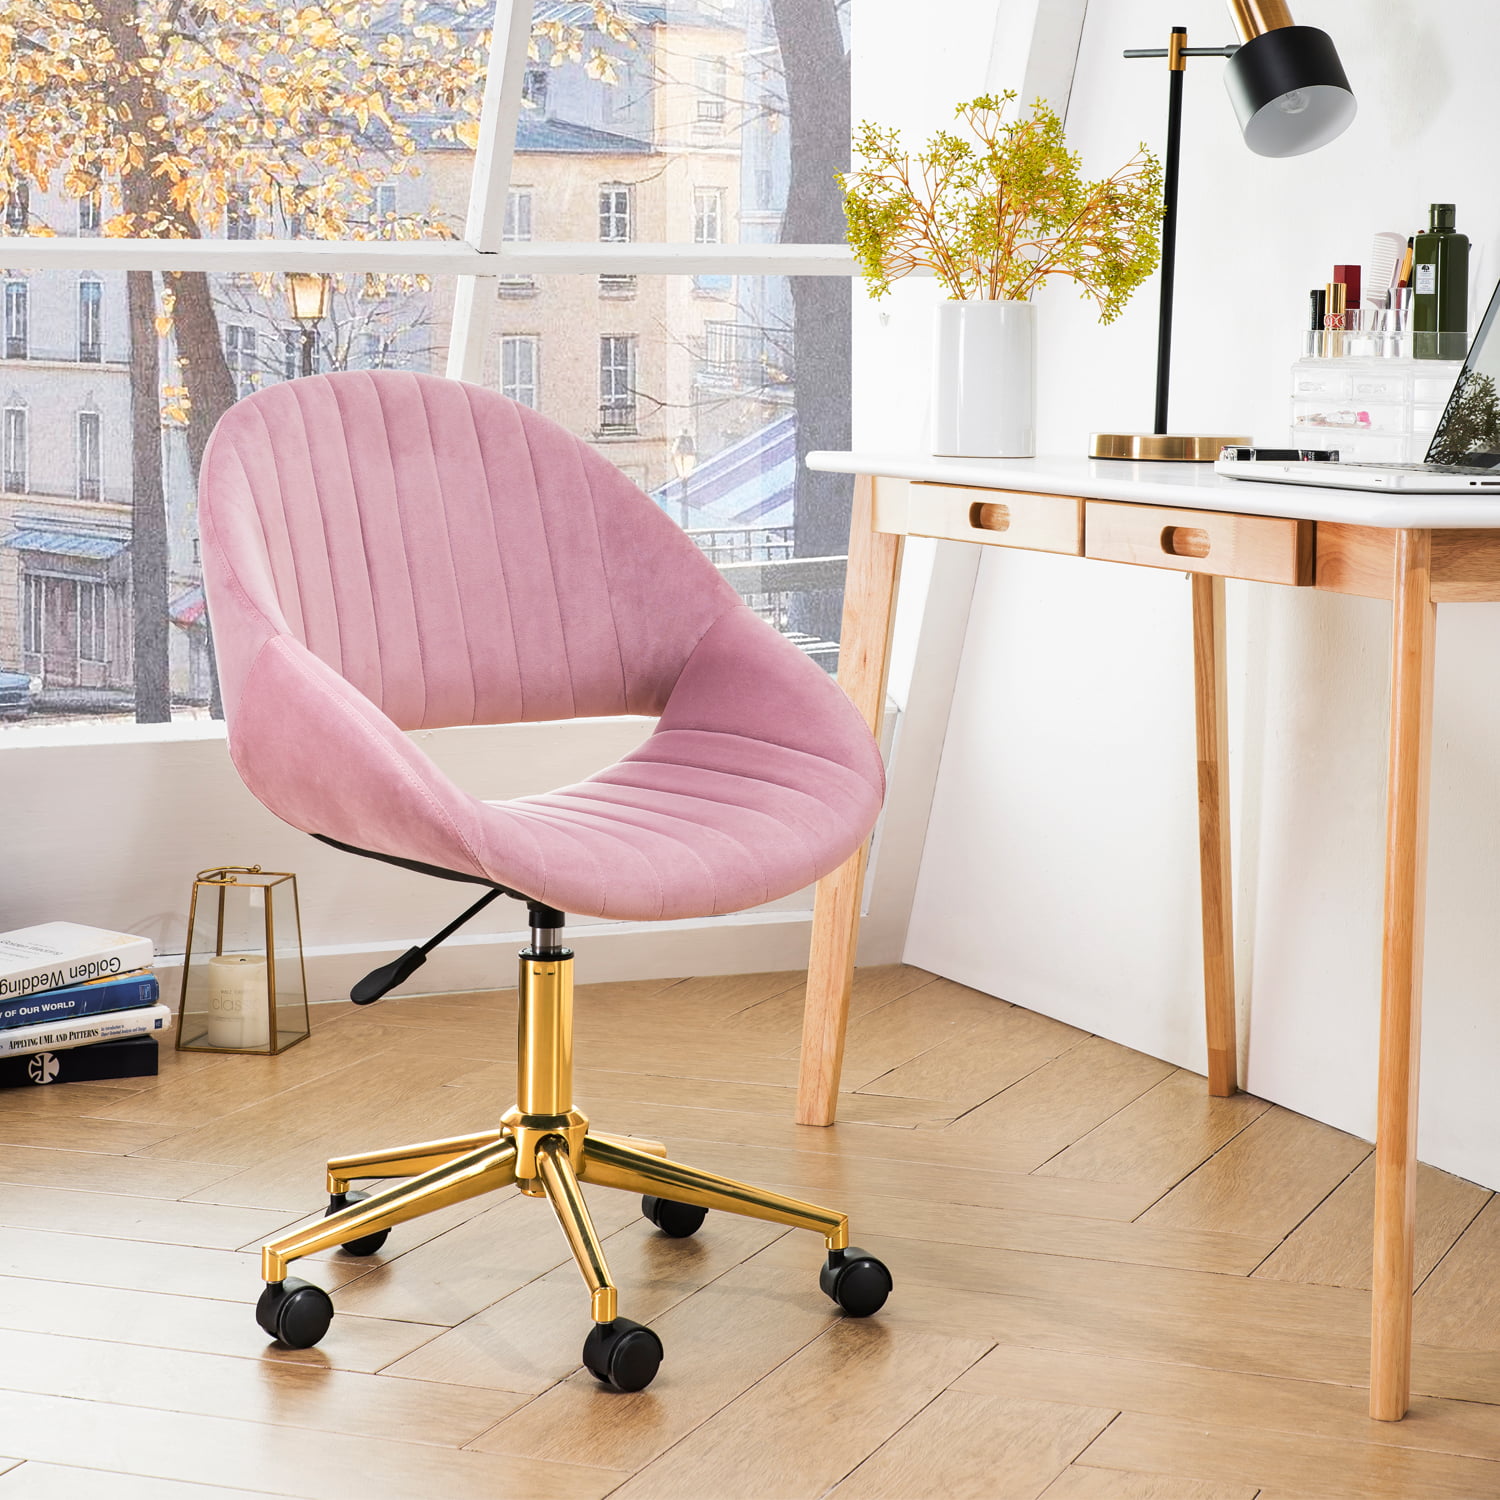 OVIOS Cute Desk Chair,Plush Velvet Office Chair for Home or Office